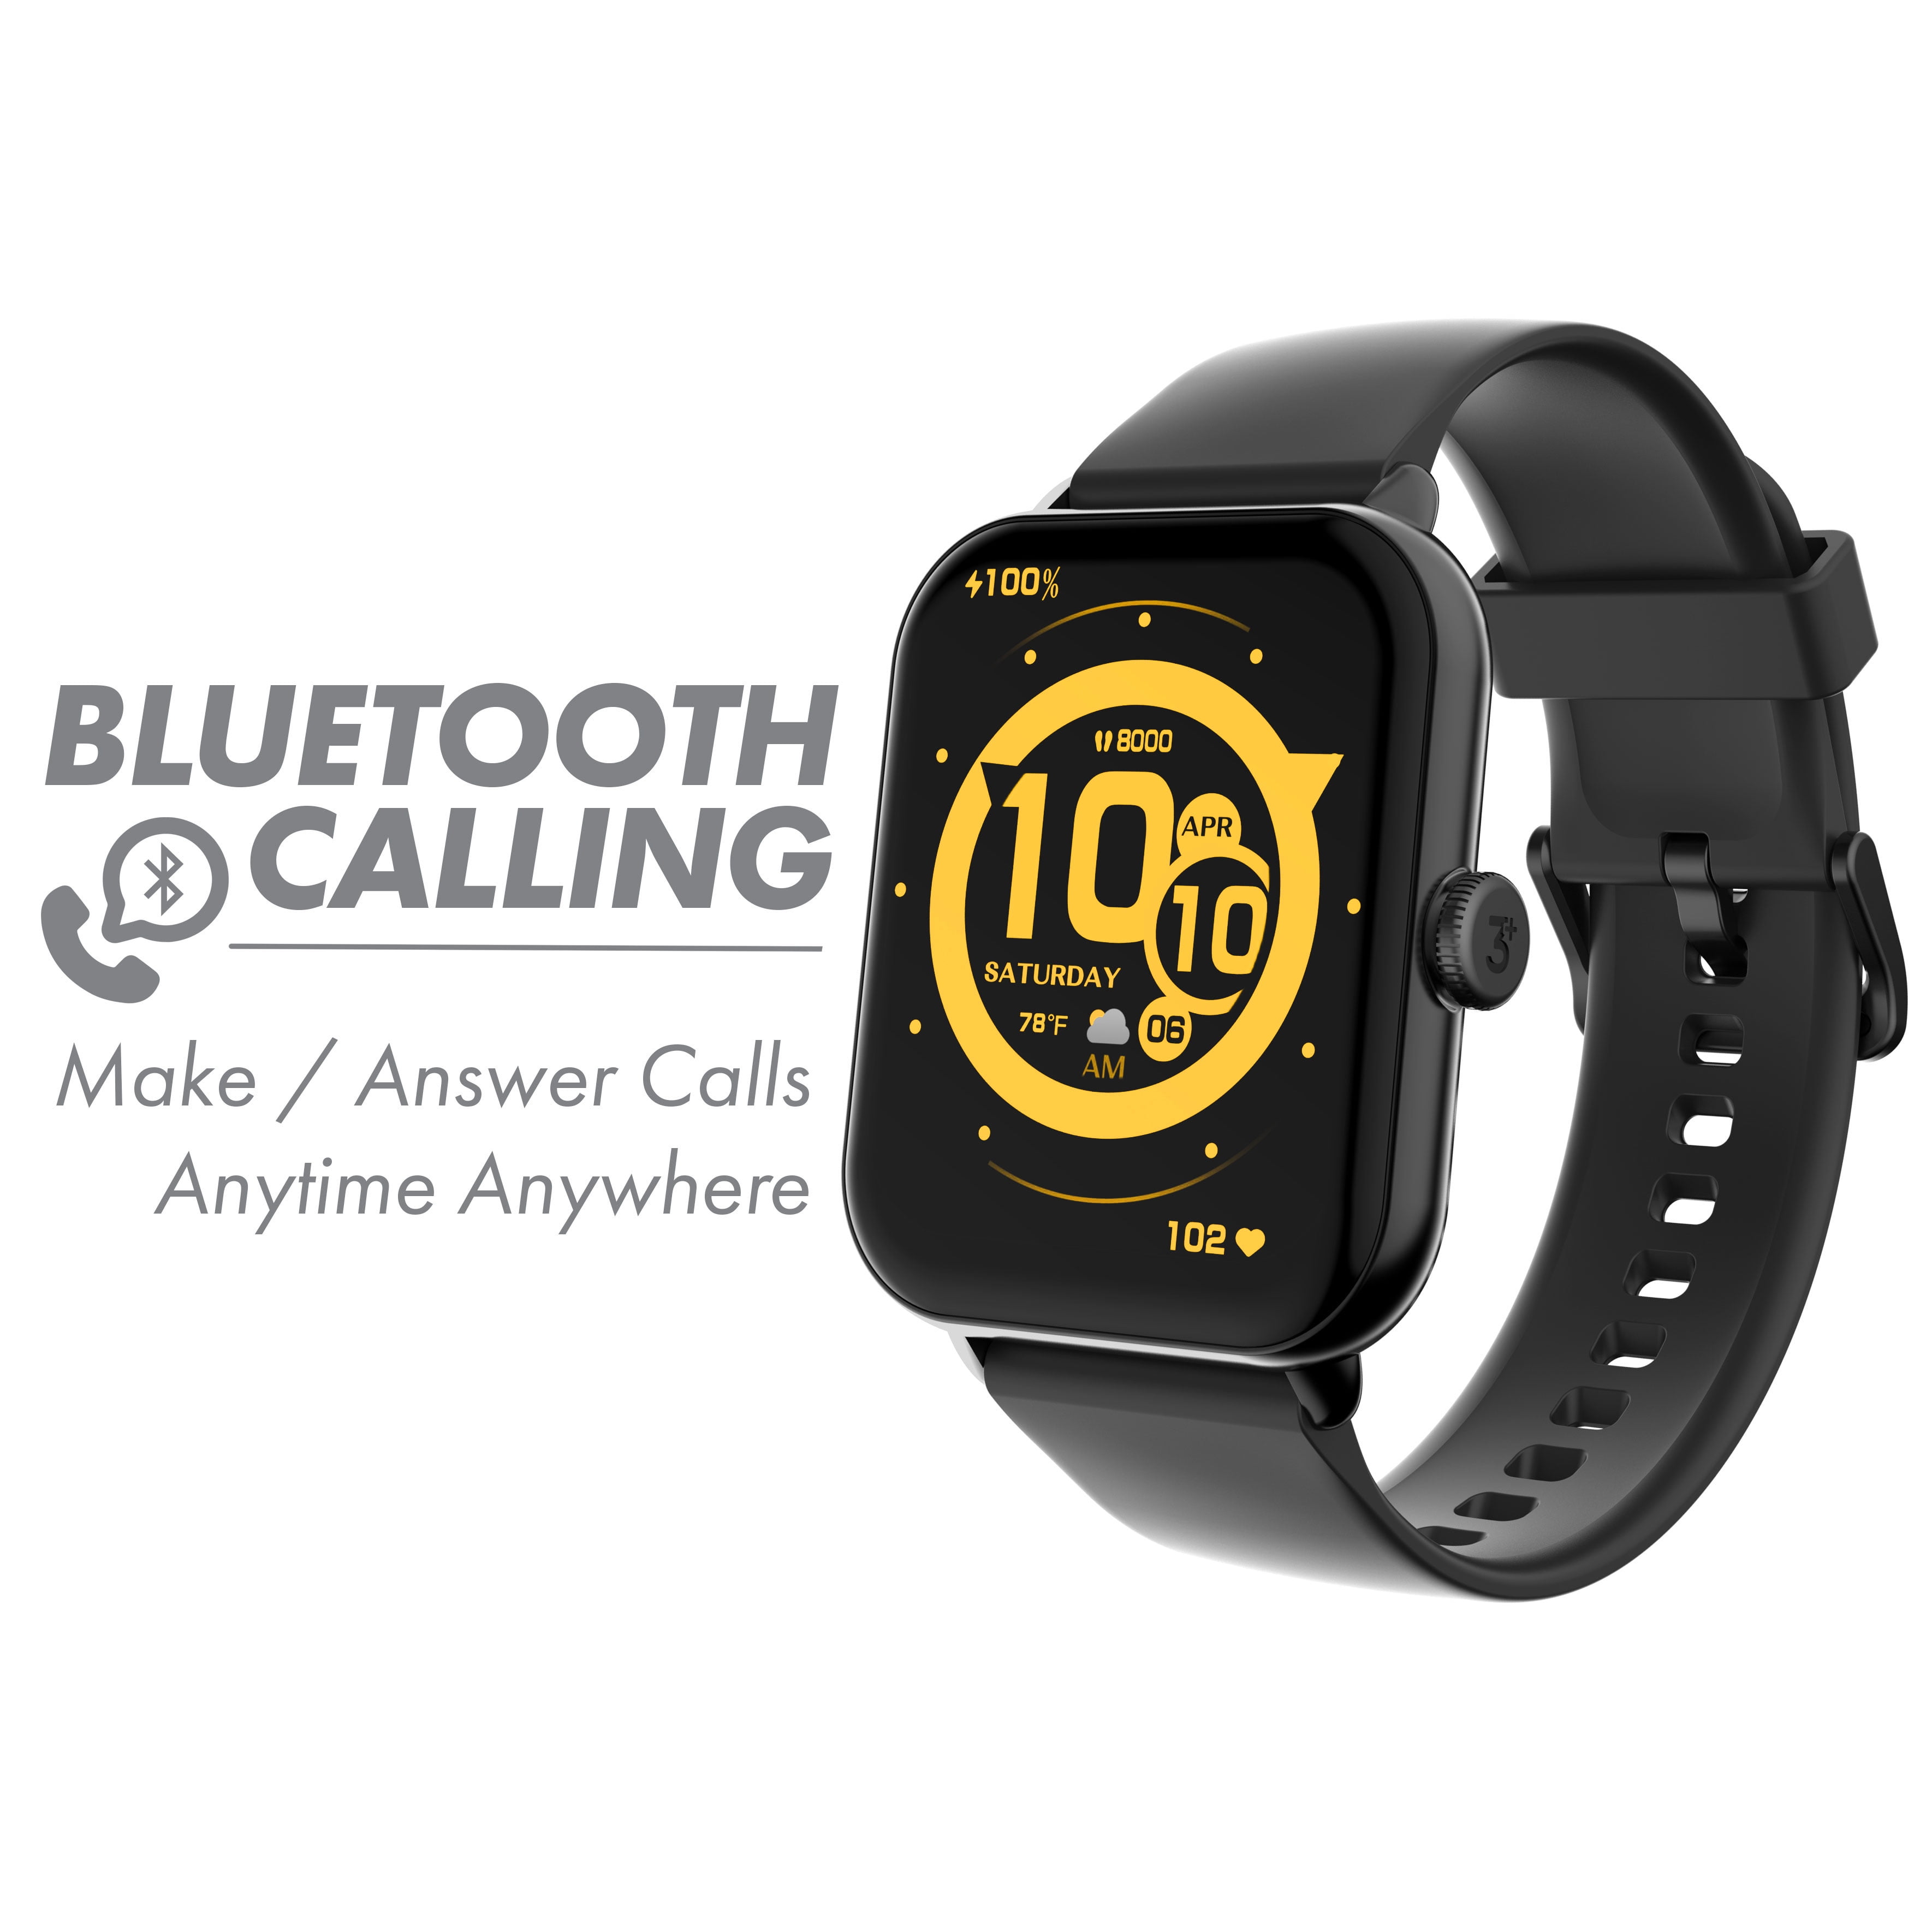 distrikt Fruity uddybe 3Plus Vibe Lite BT (Bluetooth Calling) Smartwatch Black - Unisex -  Walmart.com